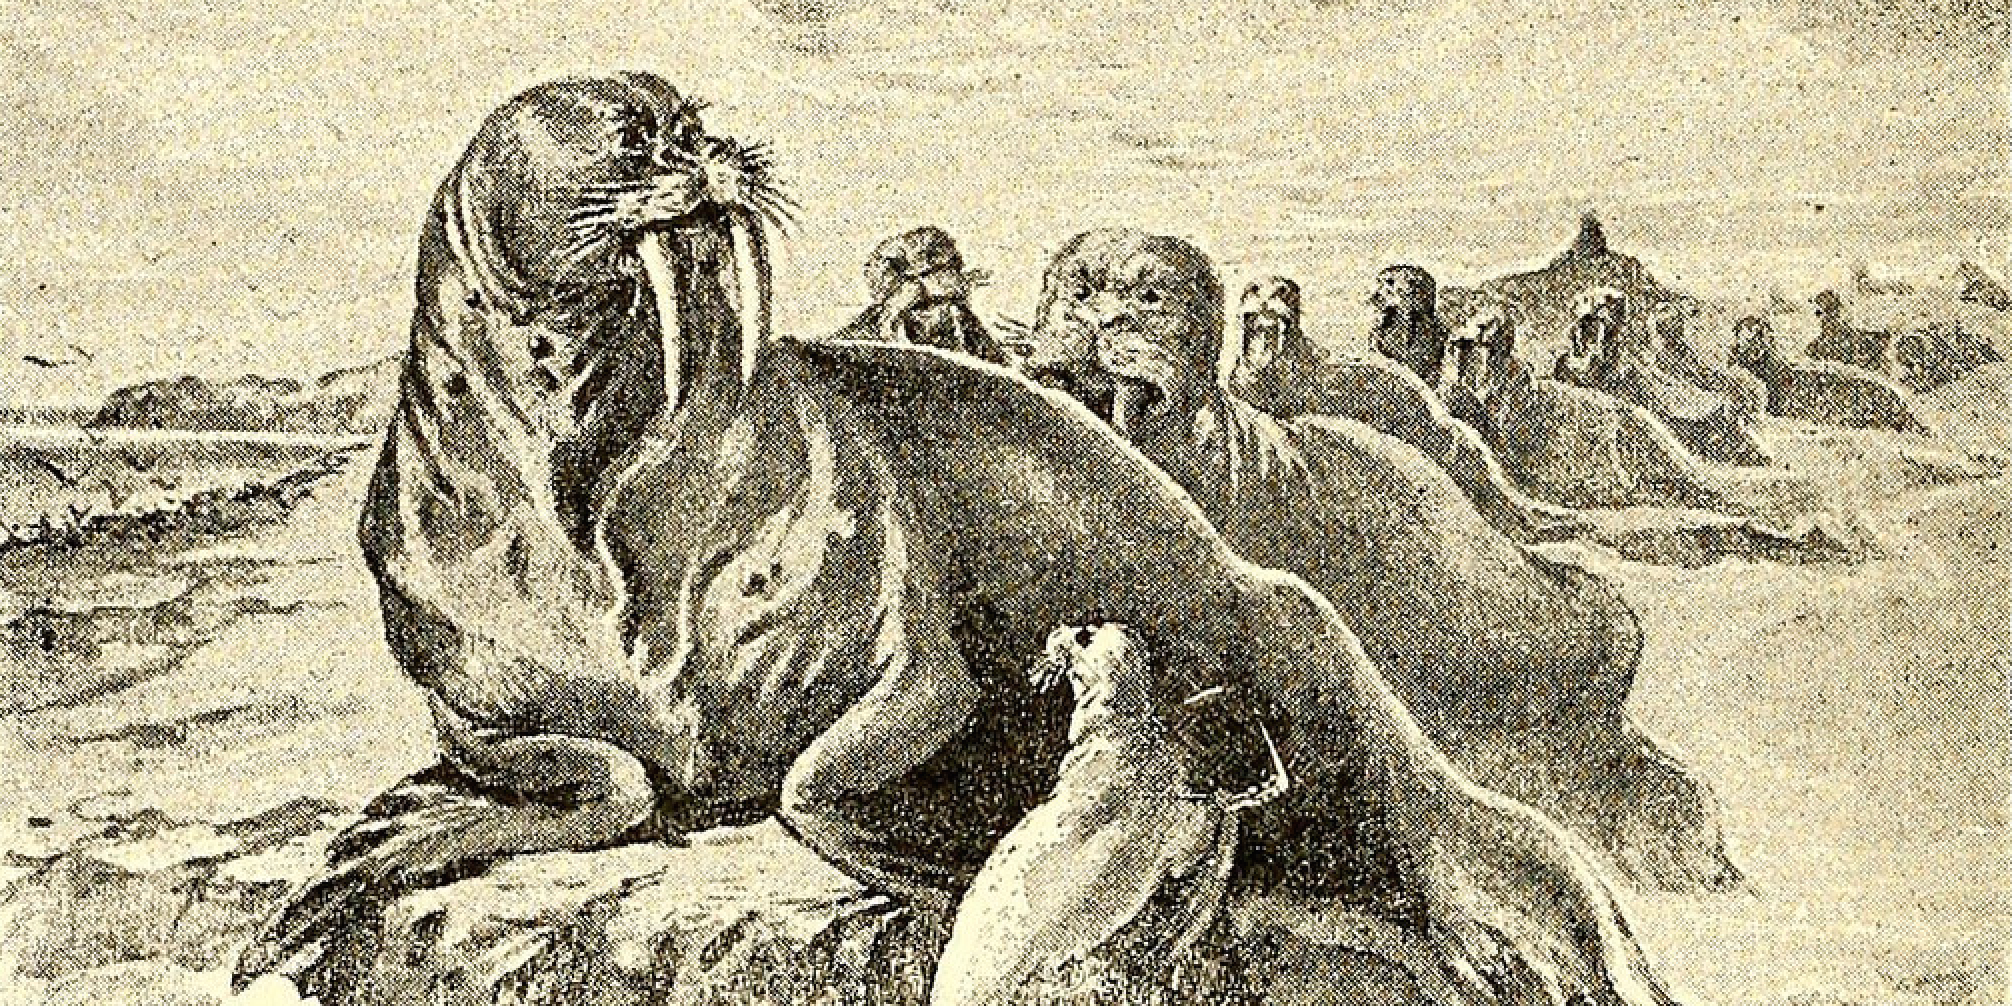 Walrus - New York Century Co. c. 1894